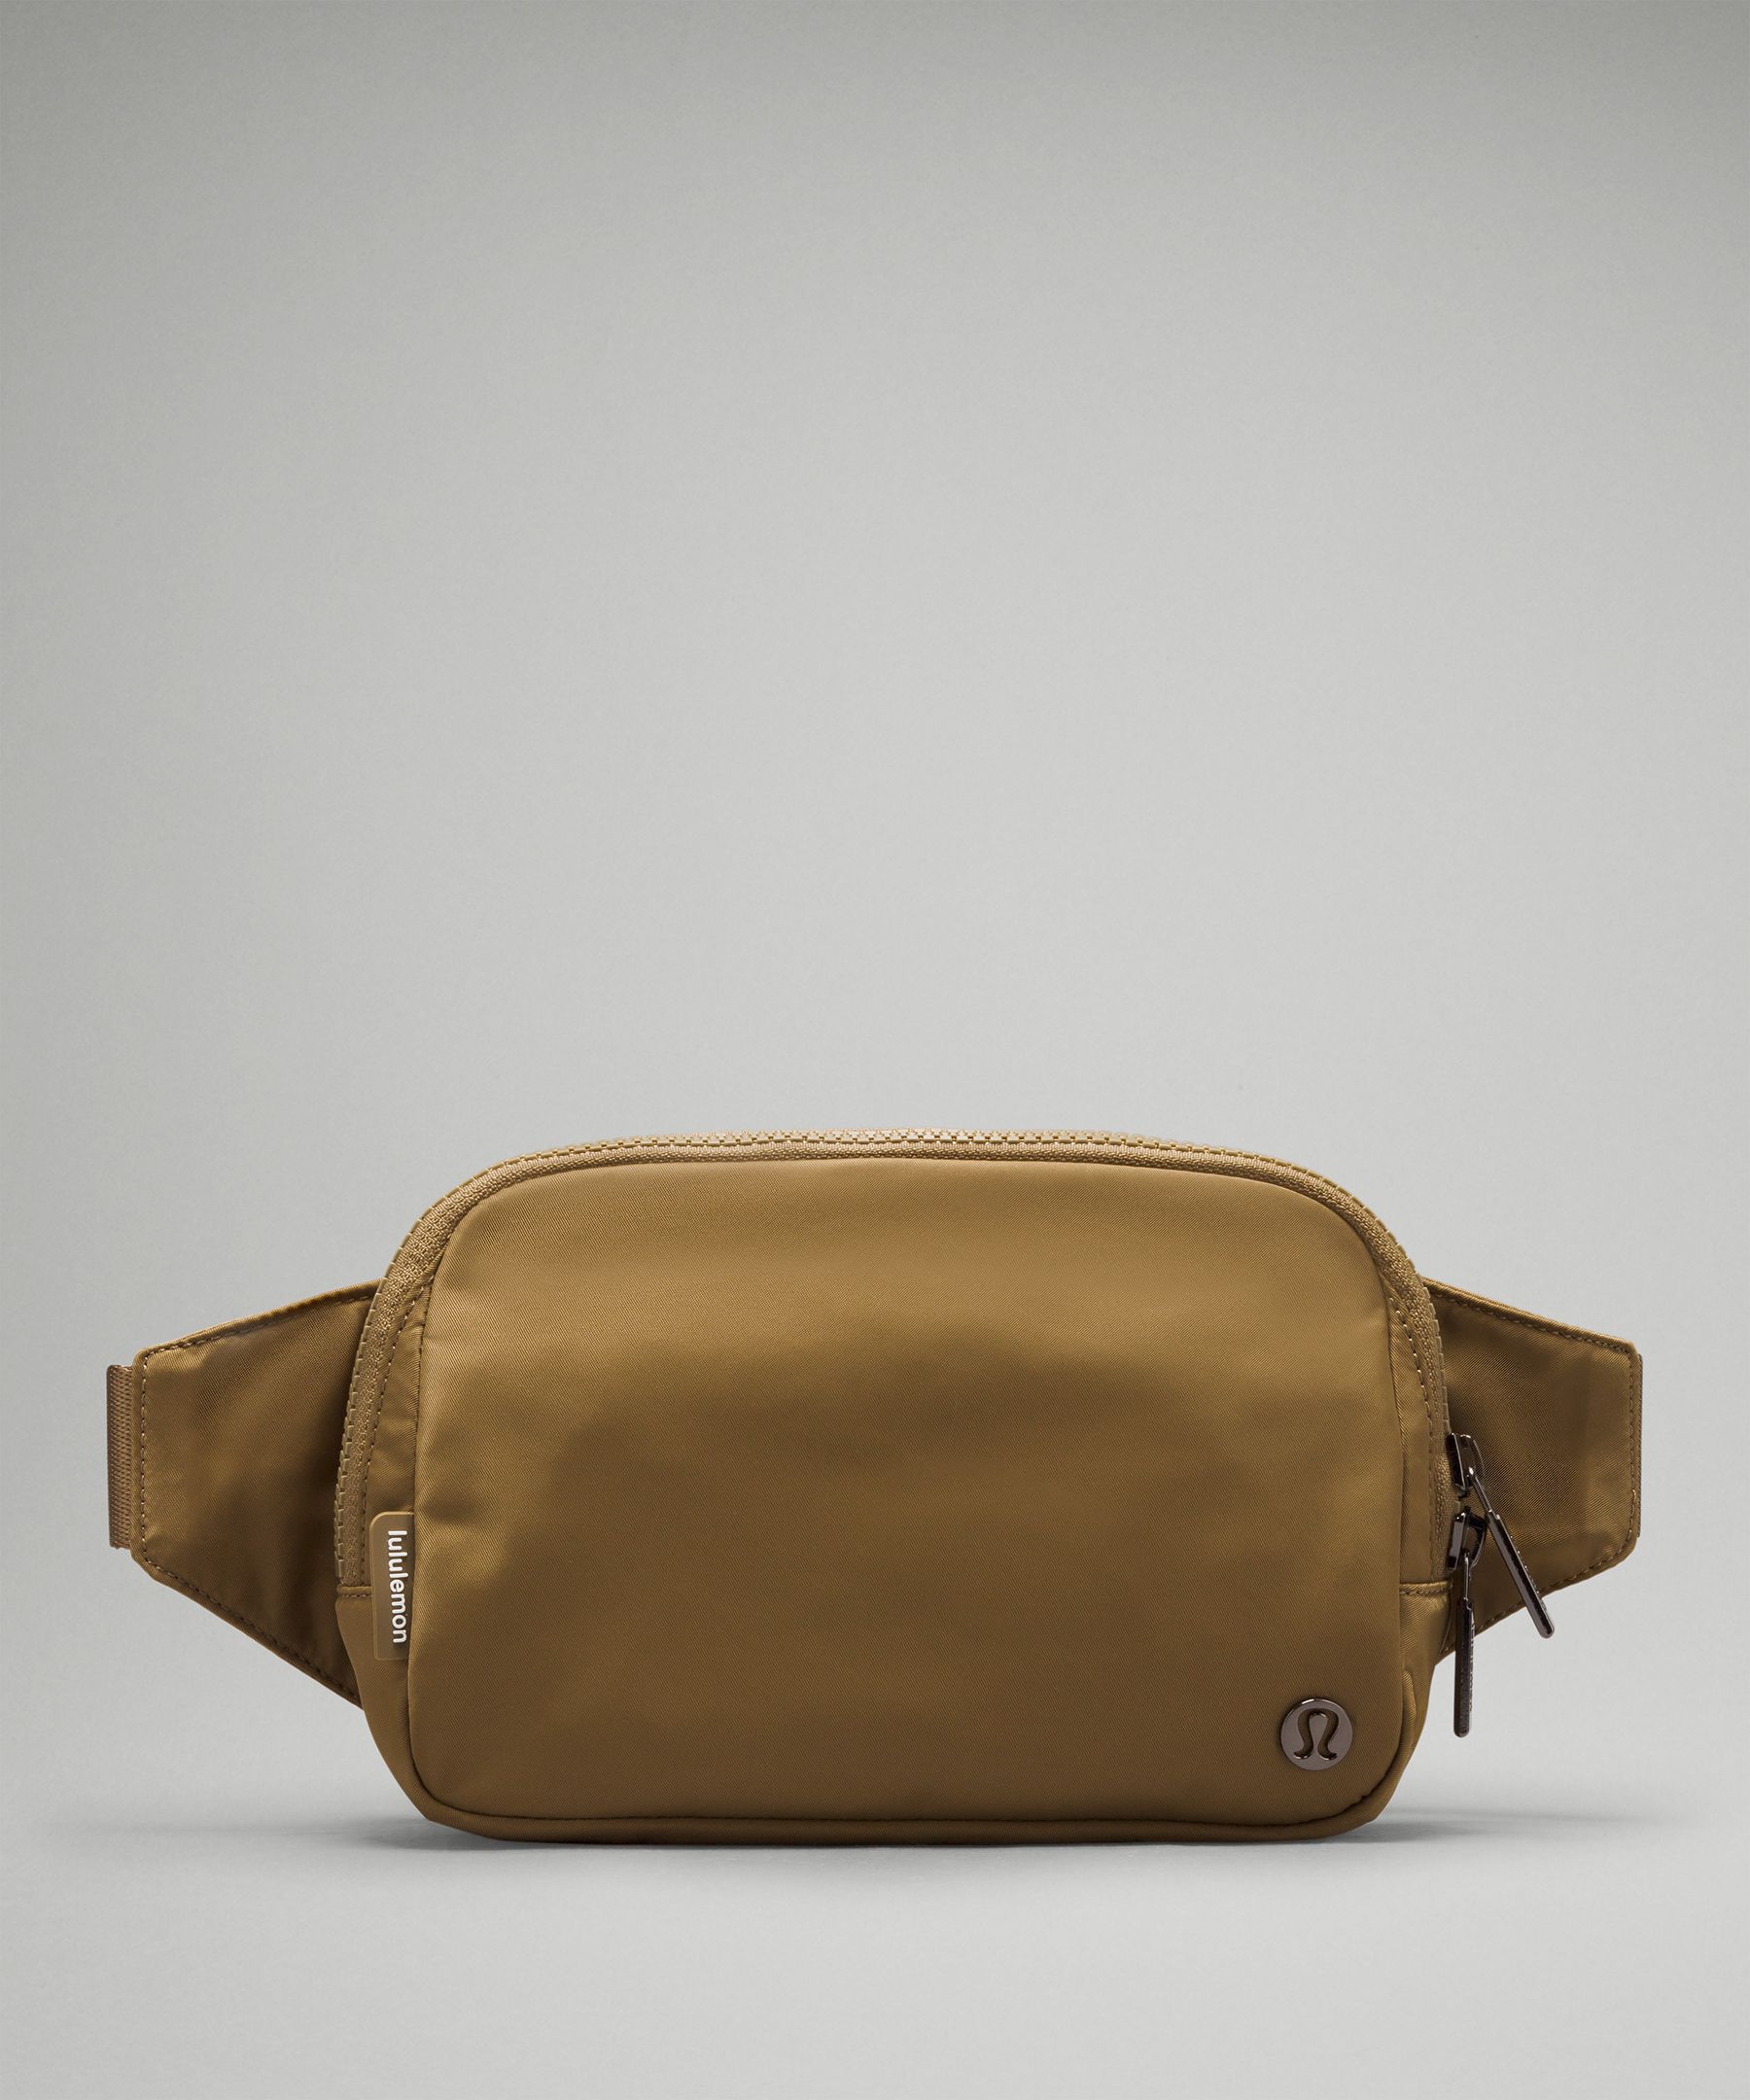 Lululemon Everywhere Belt Bag  Plus Size Body 16-18 (Apple Shape) 